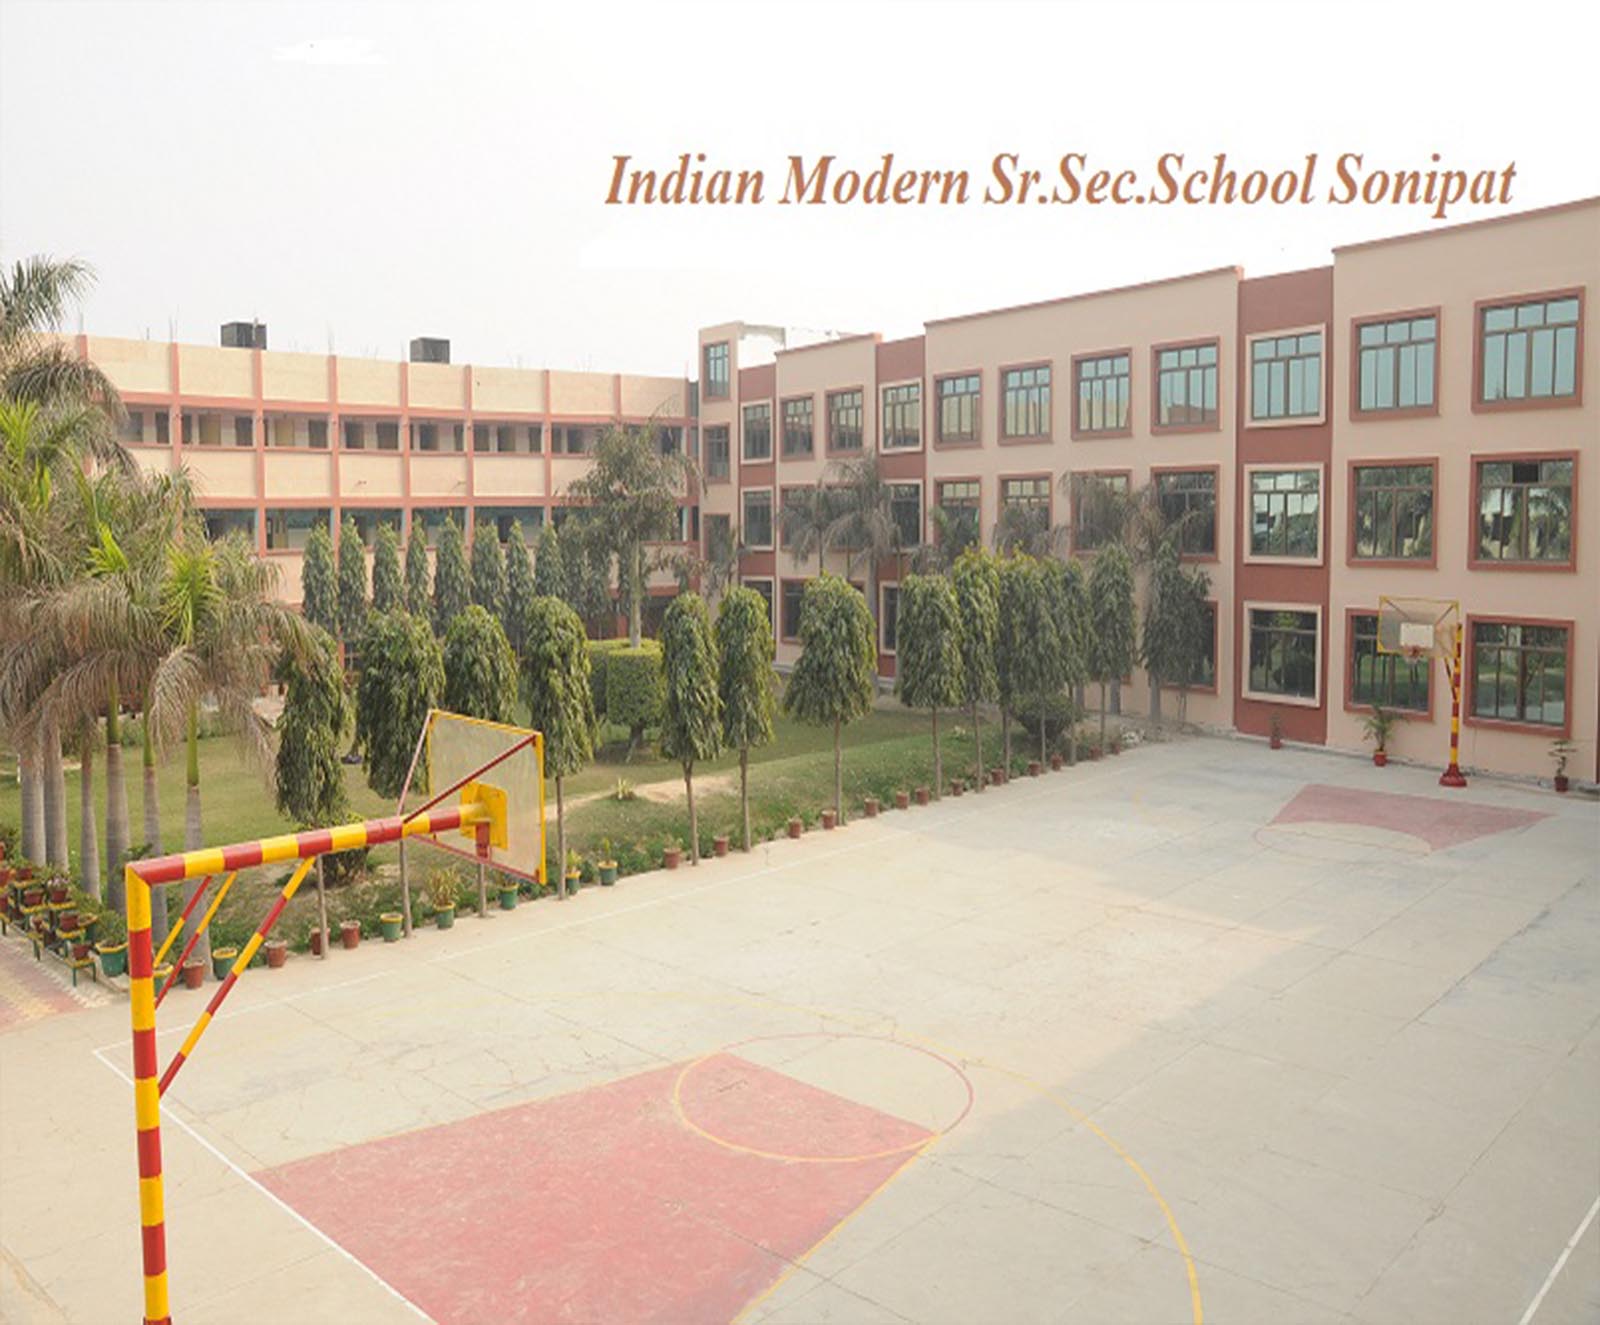 Indian Modern Sr. Sec. School Sonipat Schools 01